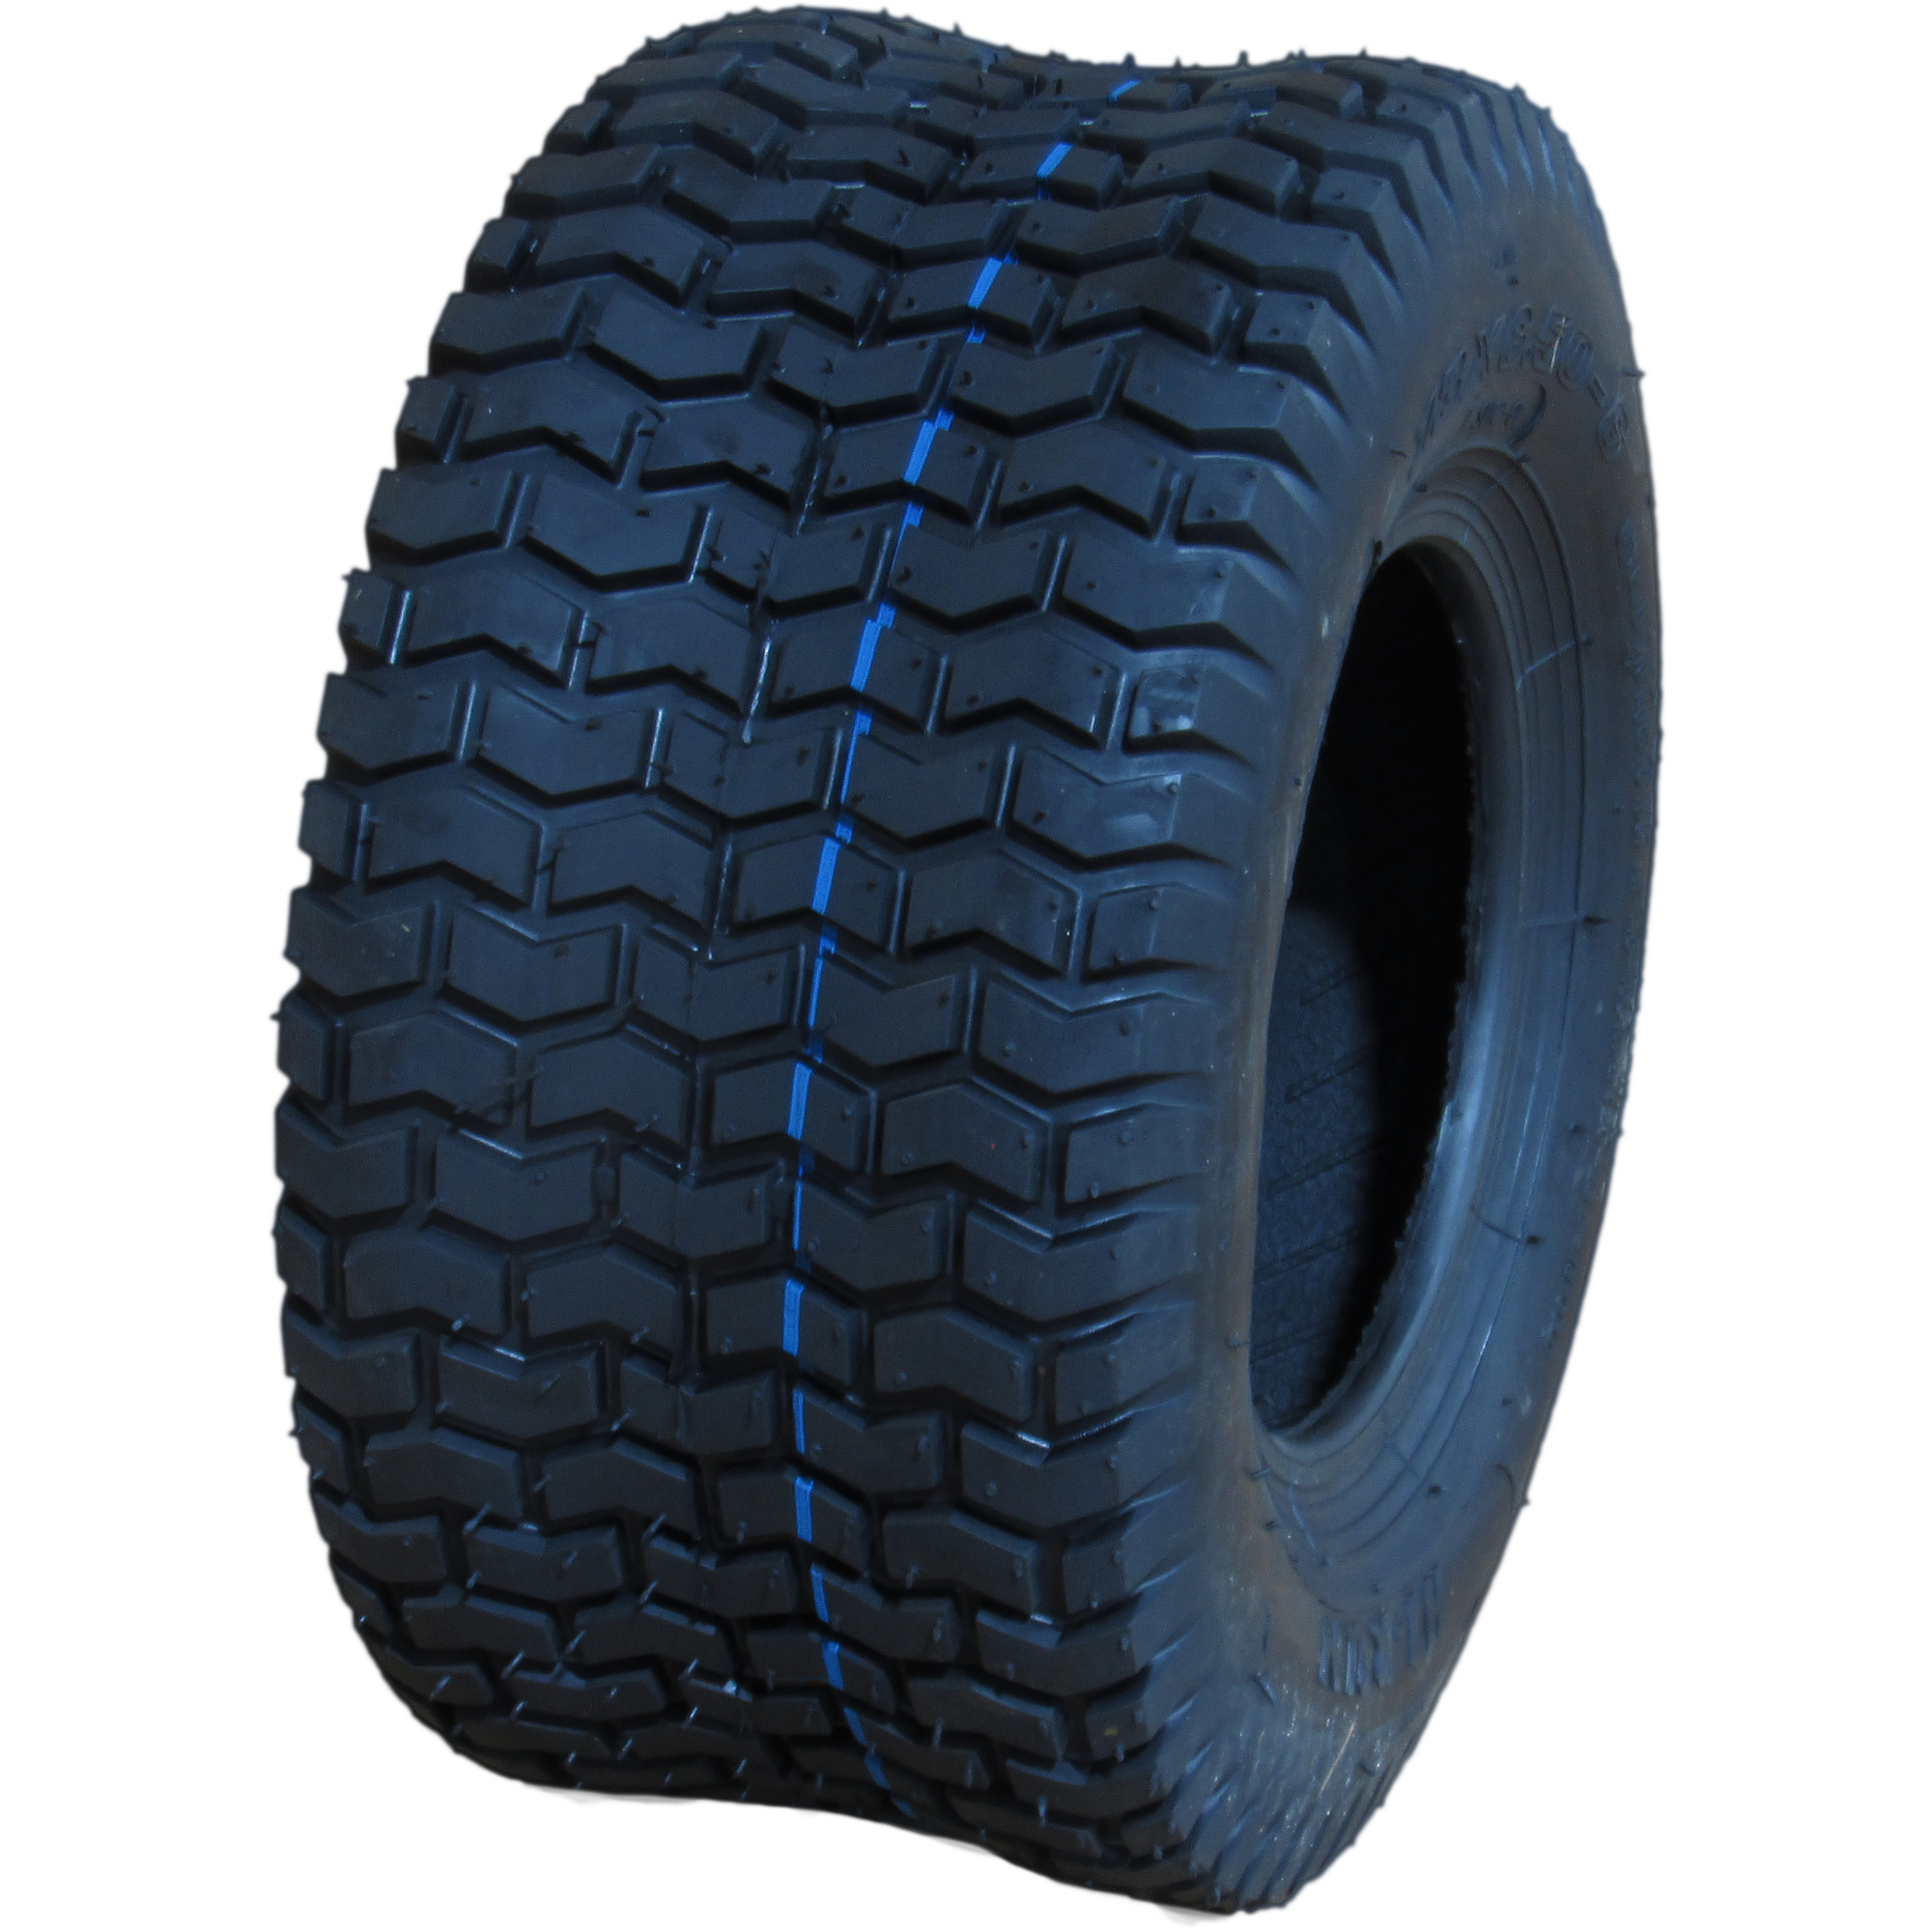 HI-RUN, Lawn Garden Tire, SU12 Turf II, Tire Size 13X6.50-6 Load Range Rating A, Model WD1151